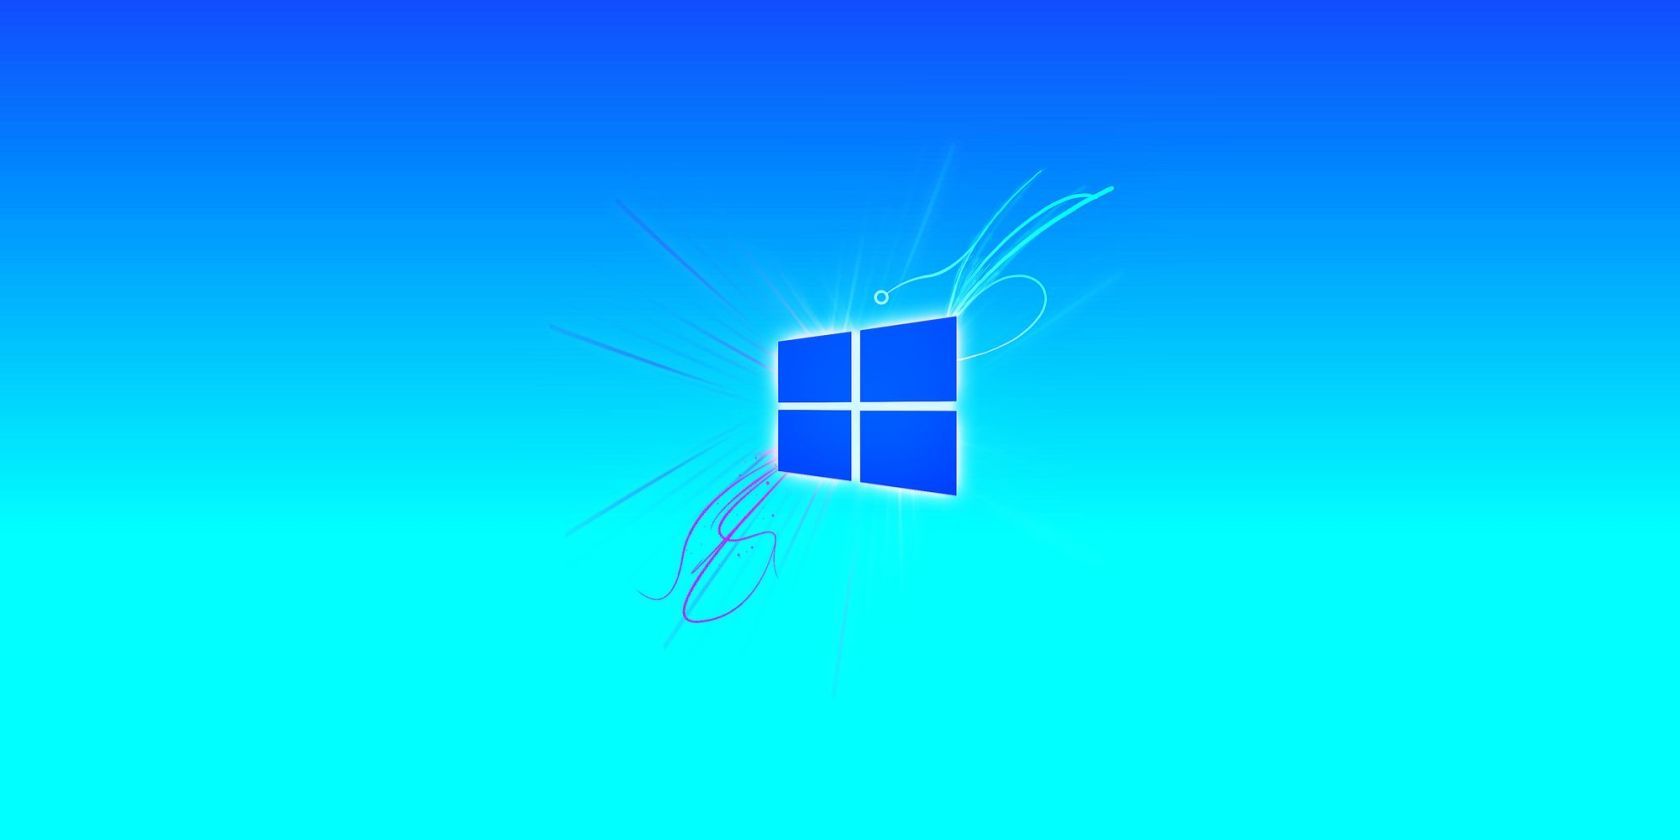 Windows keysbuff deal